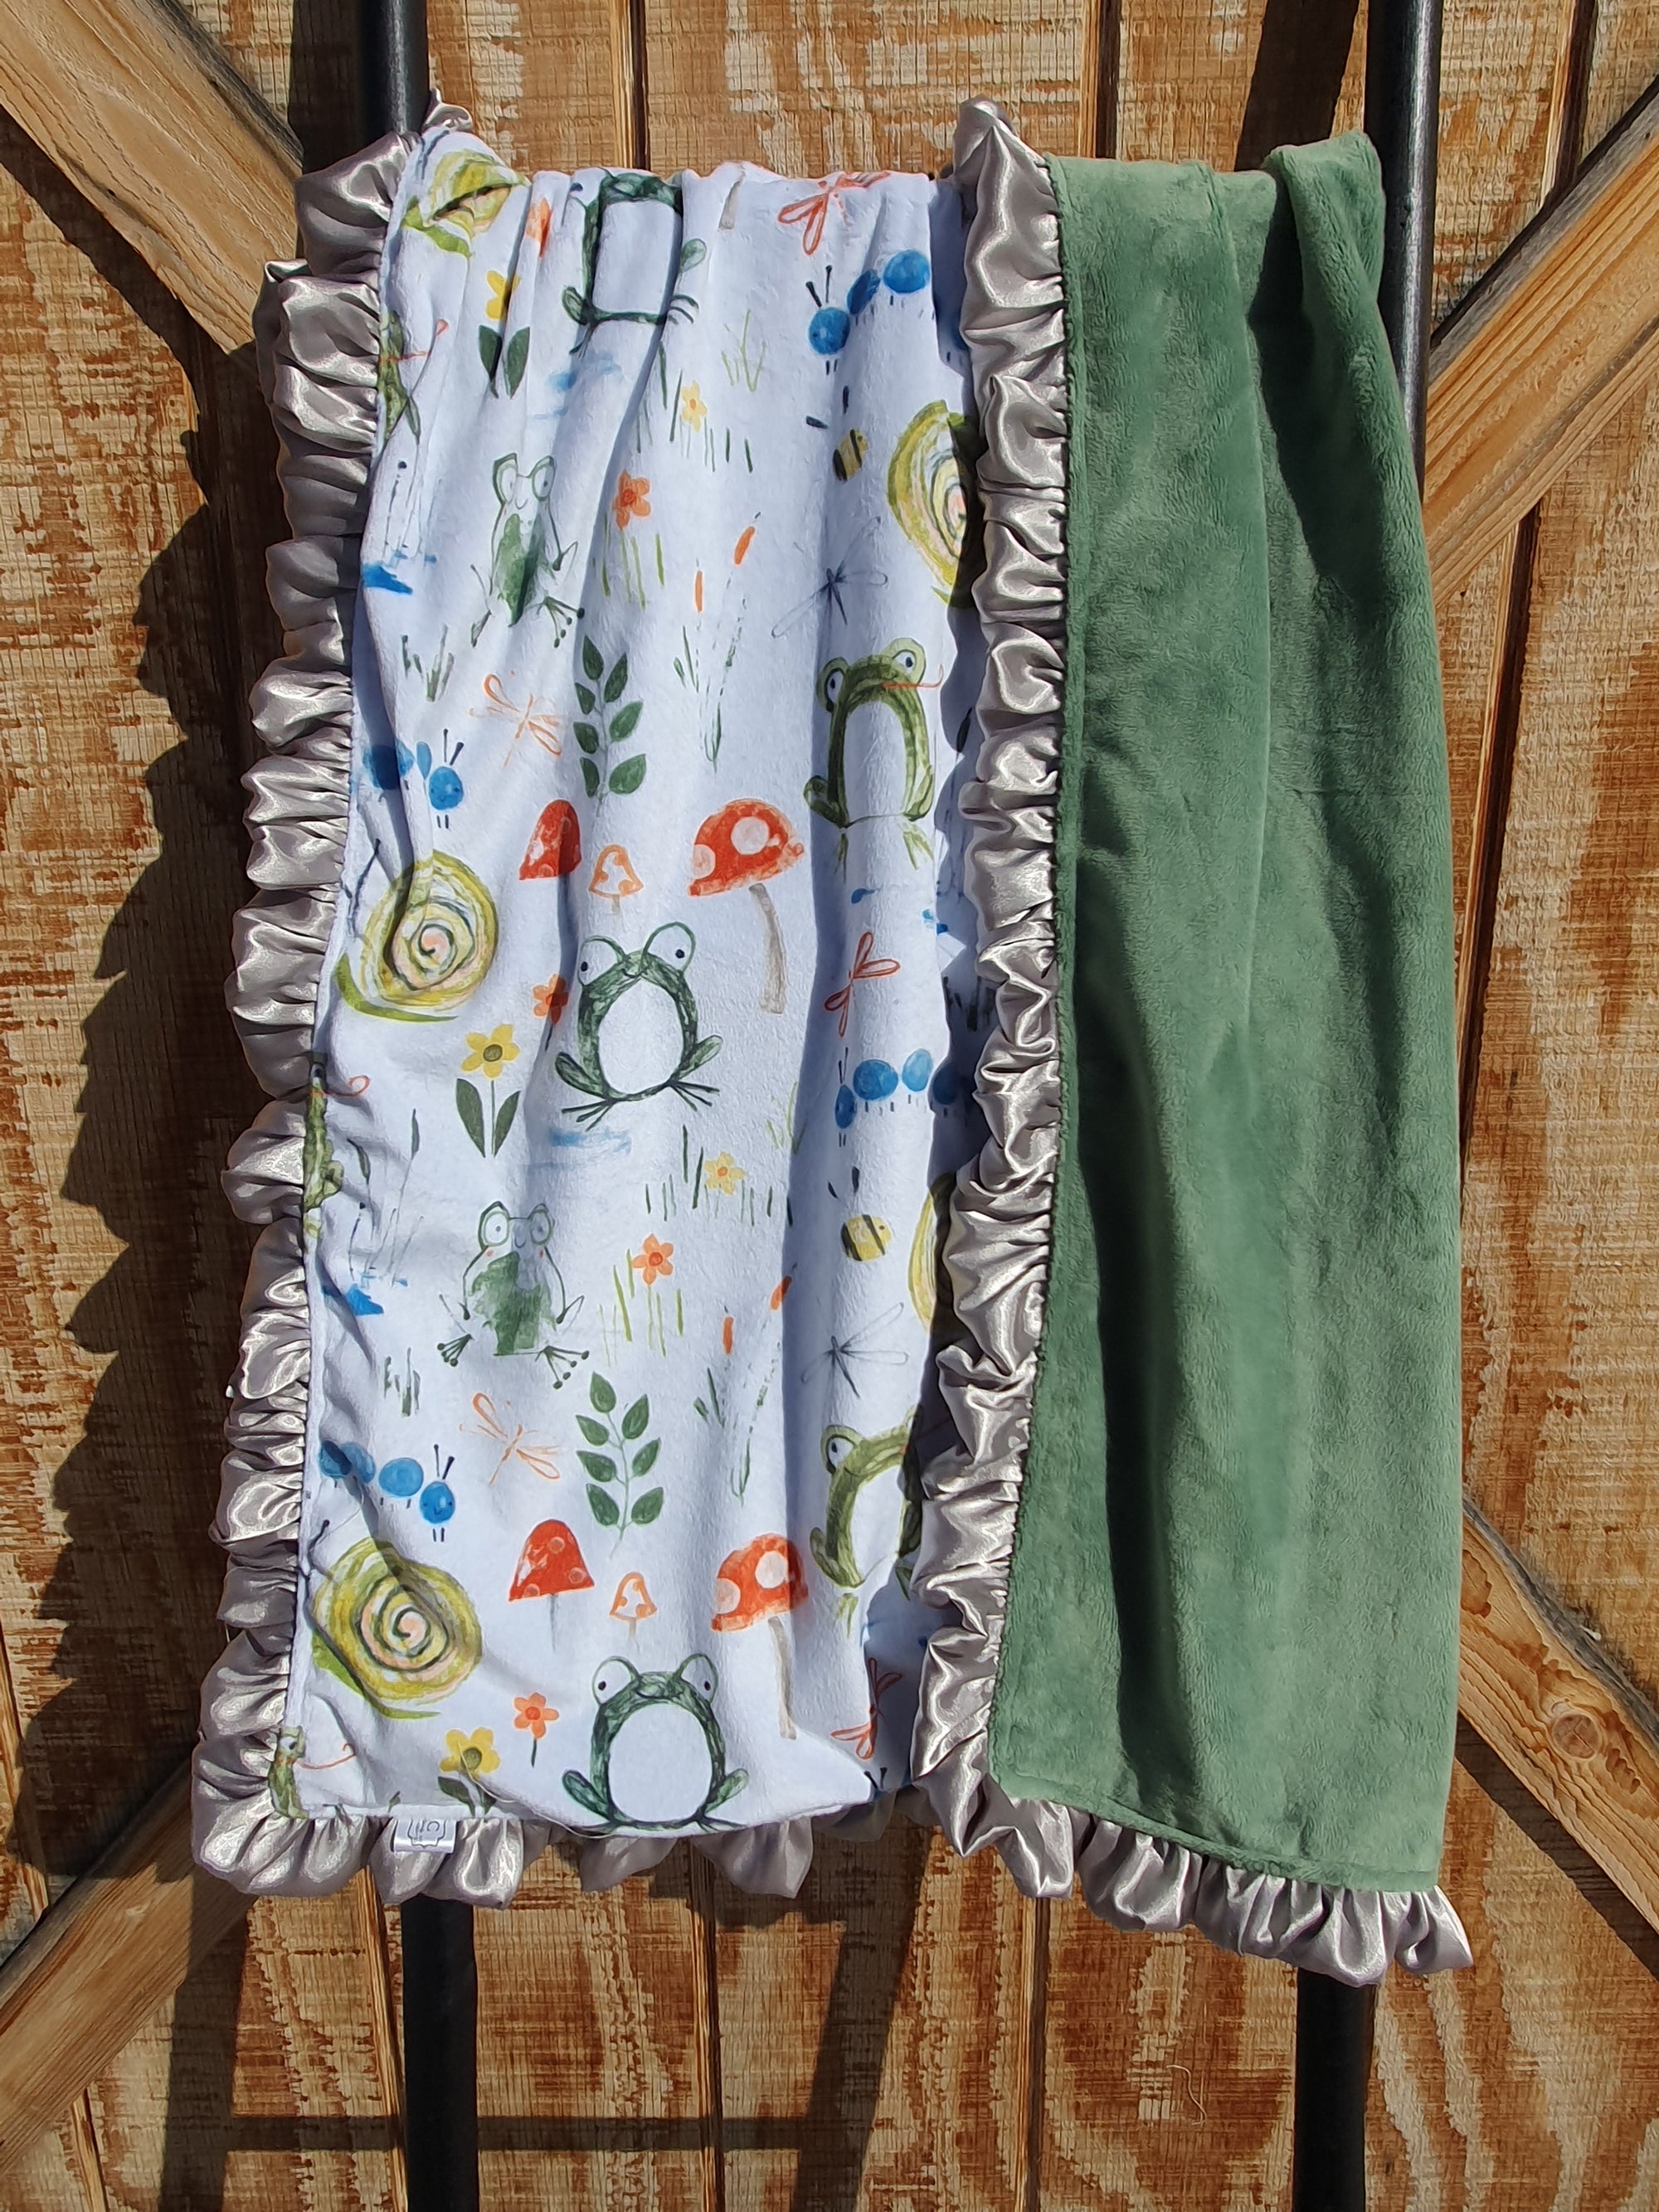 Ruffle Baby Blanket - Outdoor Minky and Sage Minky - DBC Baby Bedding Co 